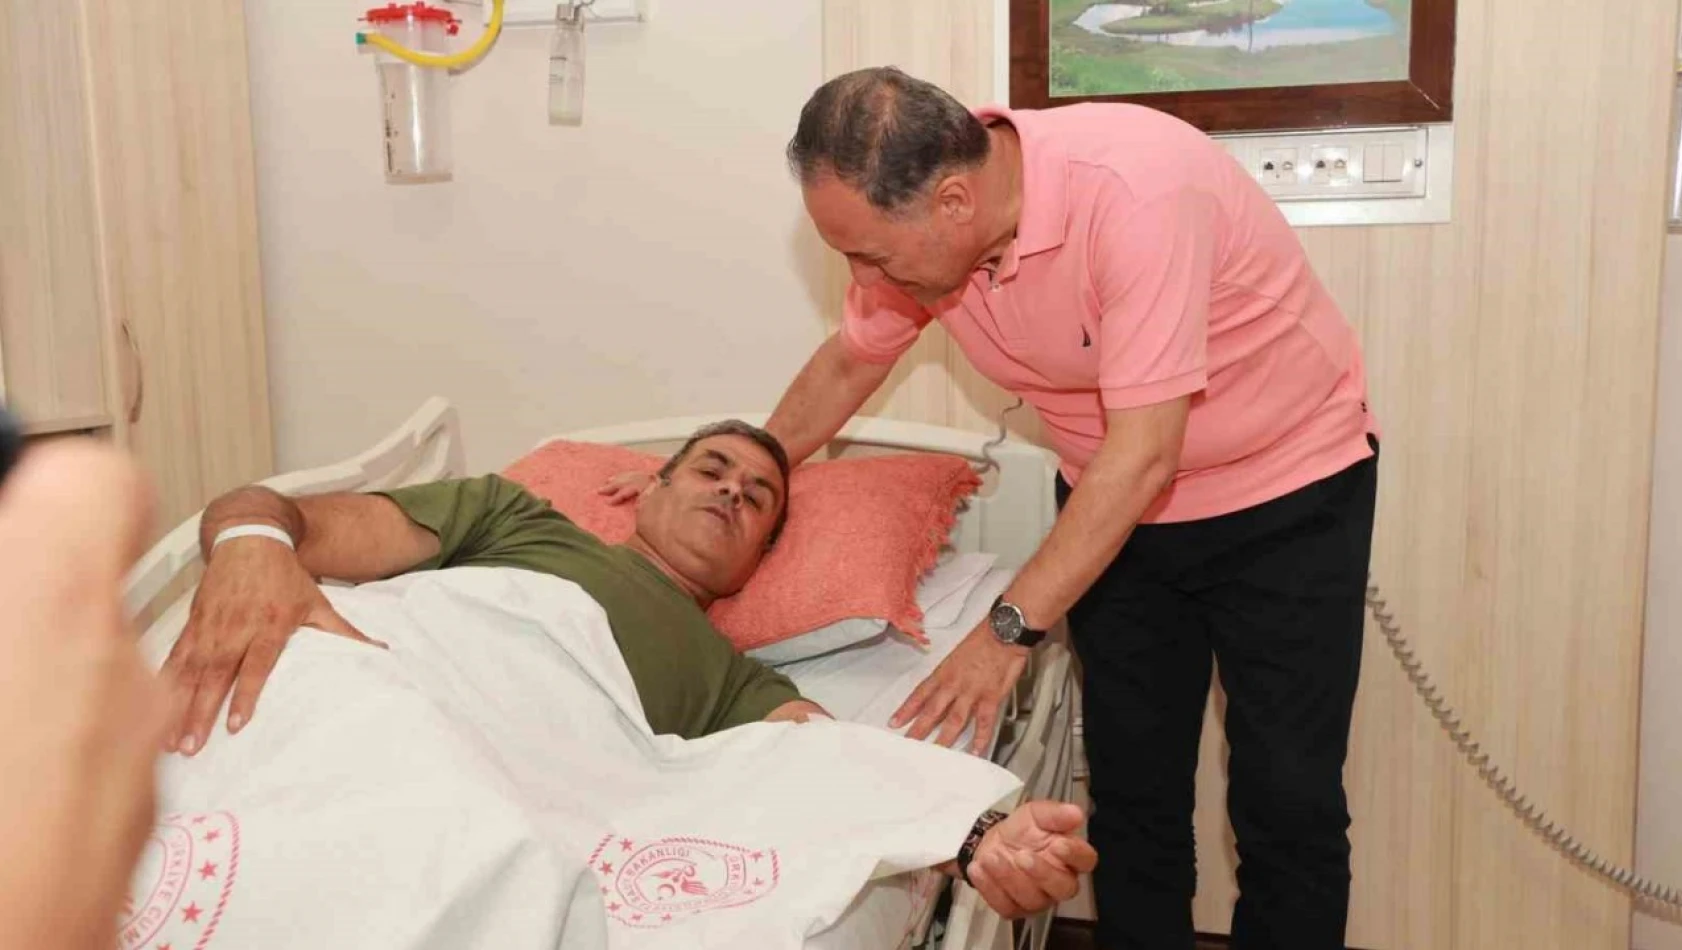 Bingöl Valisi Usta bıçaklı saldırıda yaralanan vatandaşları ziyaret etti